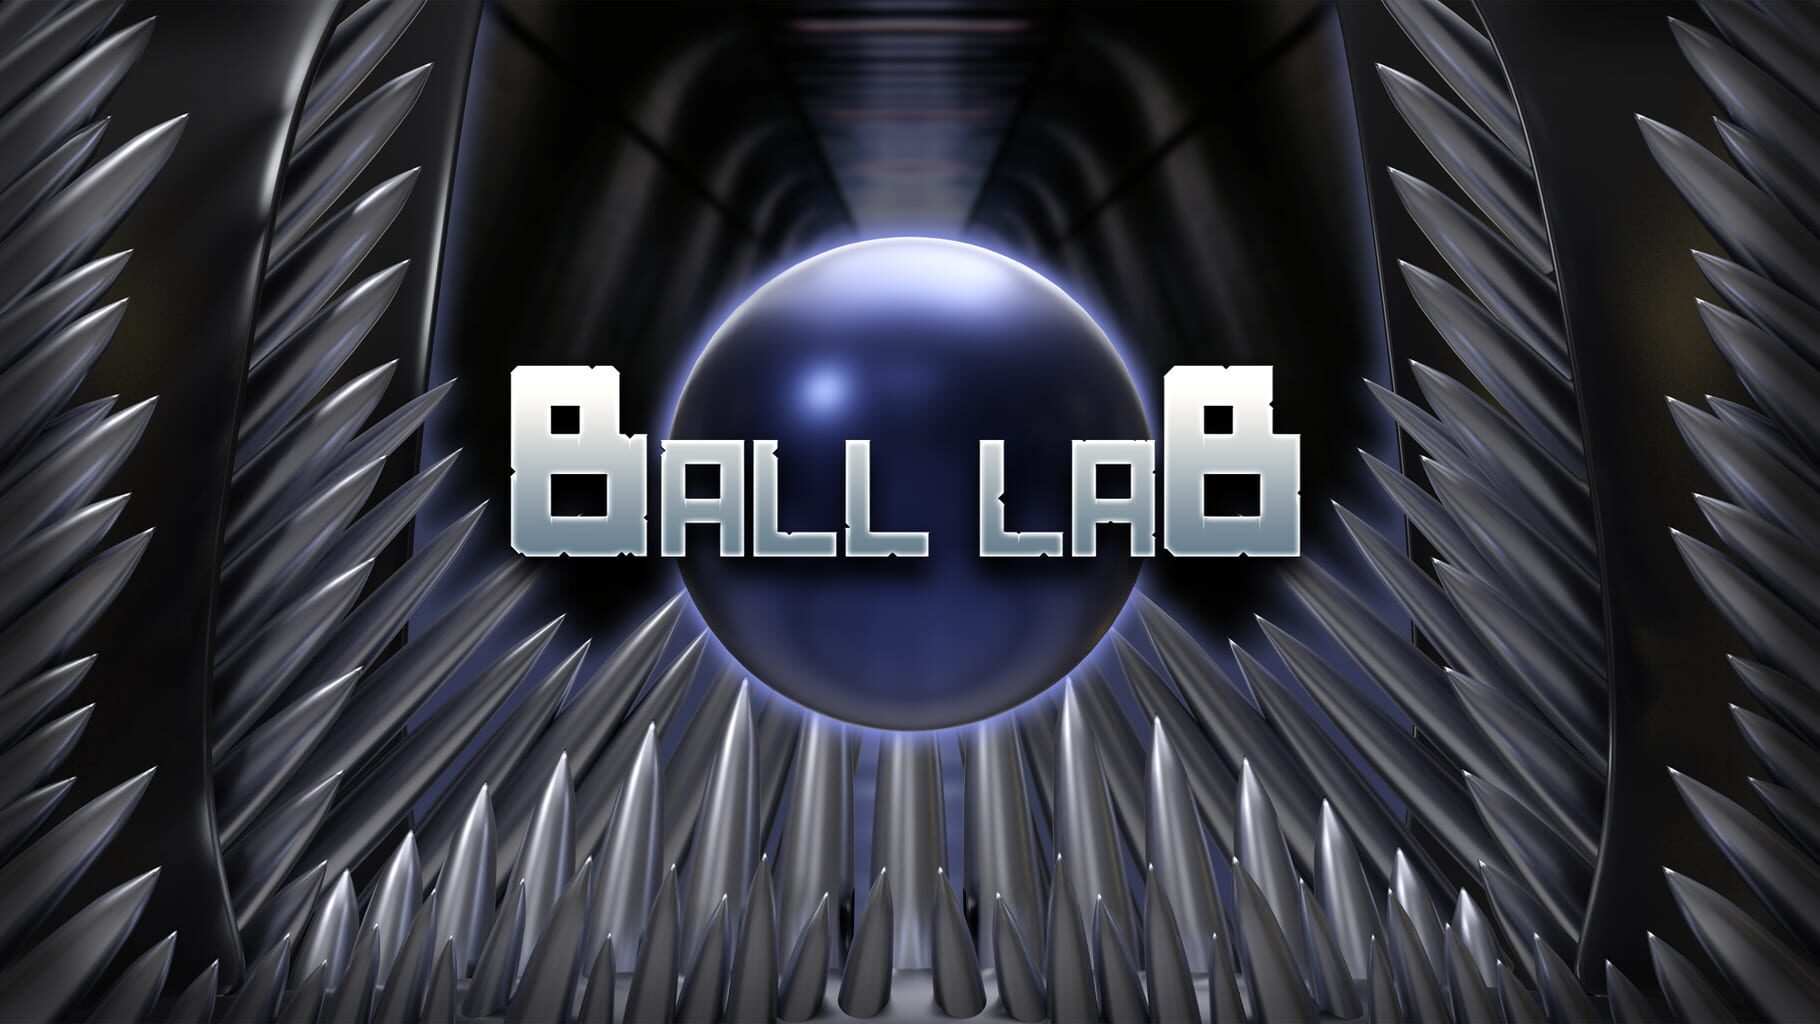 Ball laB artwork